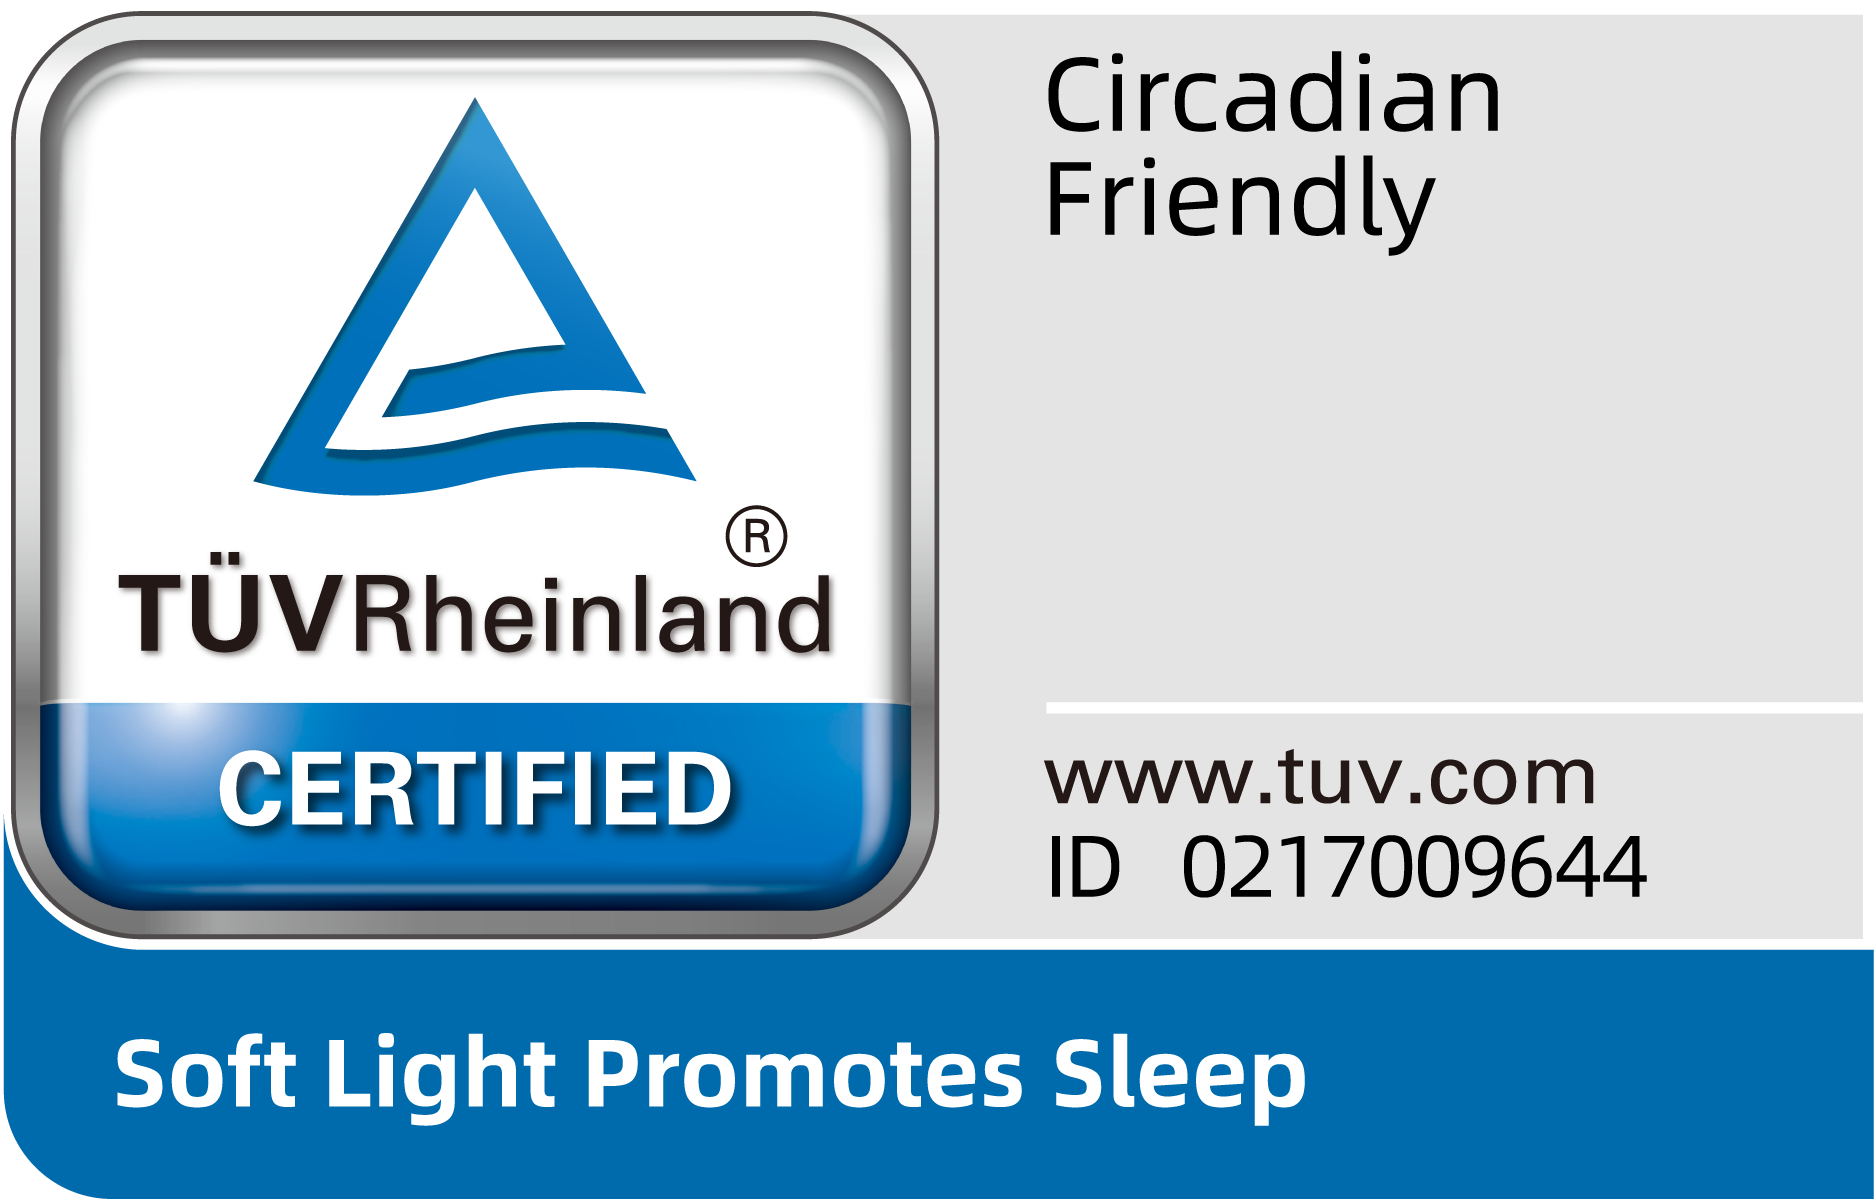 Certificação TÜV Rheinland Cicardian Friendly. 2